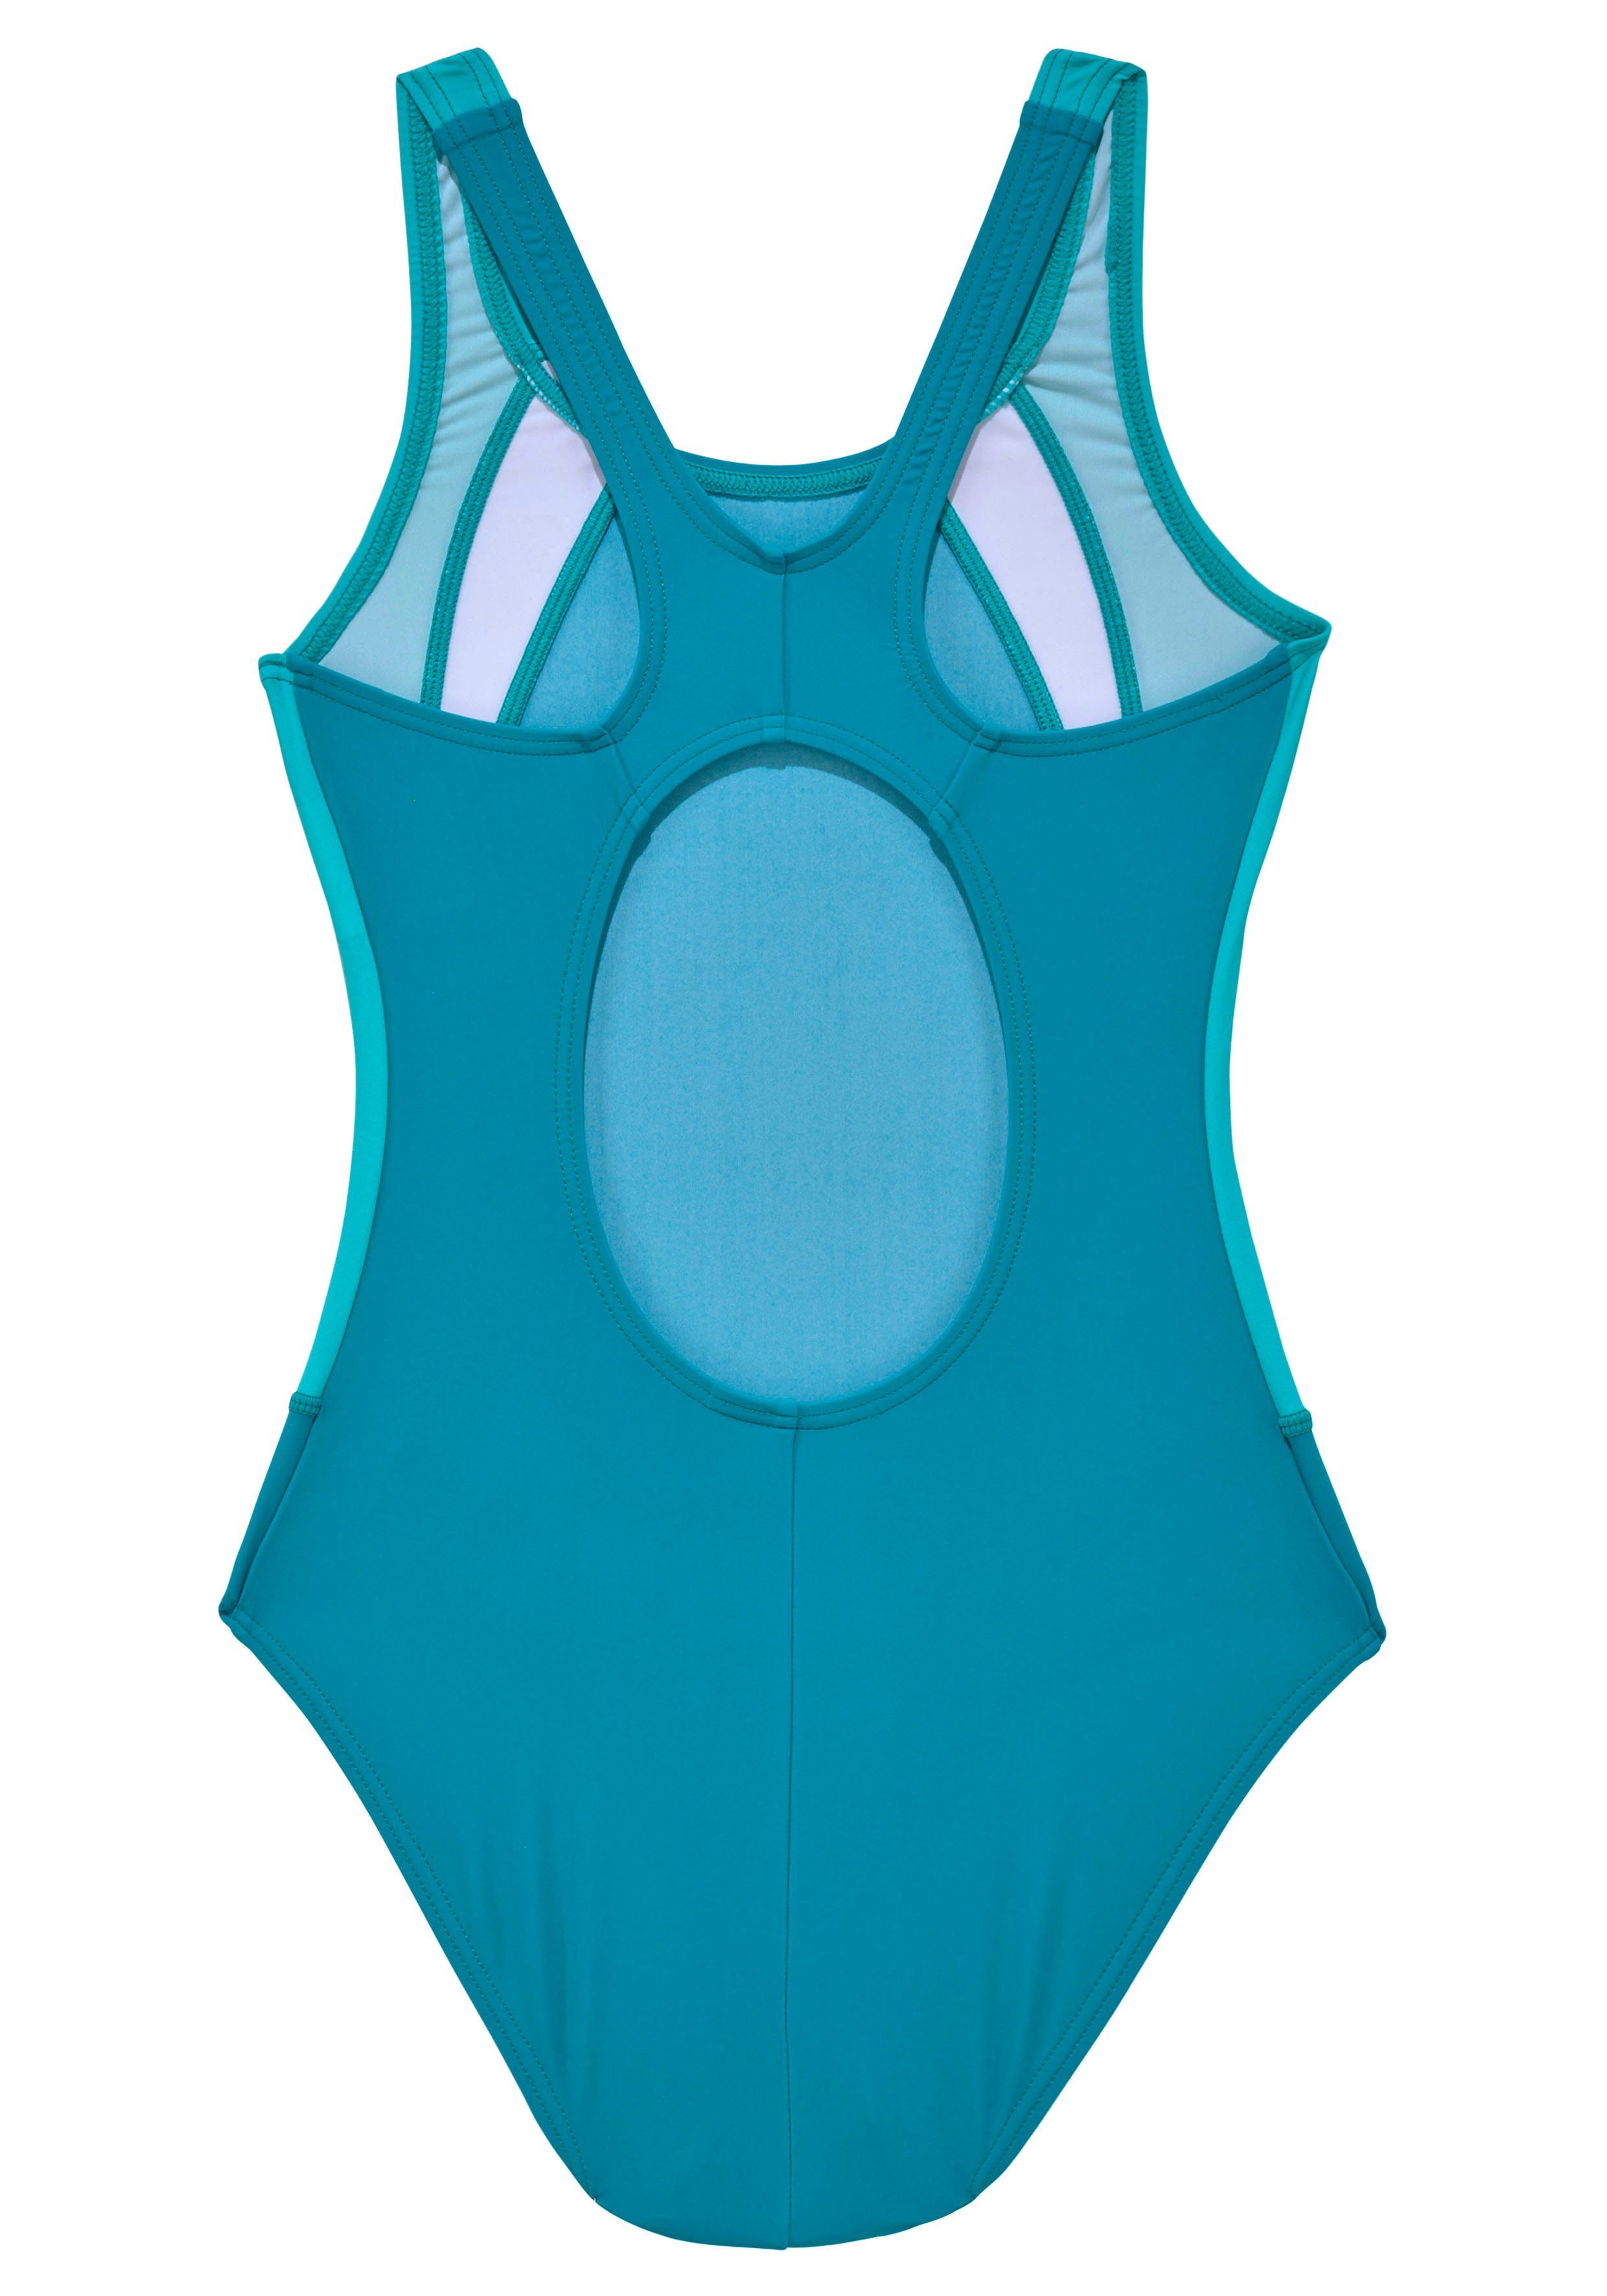 KangaROOS sportlichen türkis-blau im Badeanzug Farbmix